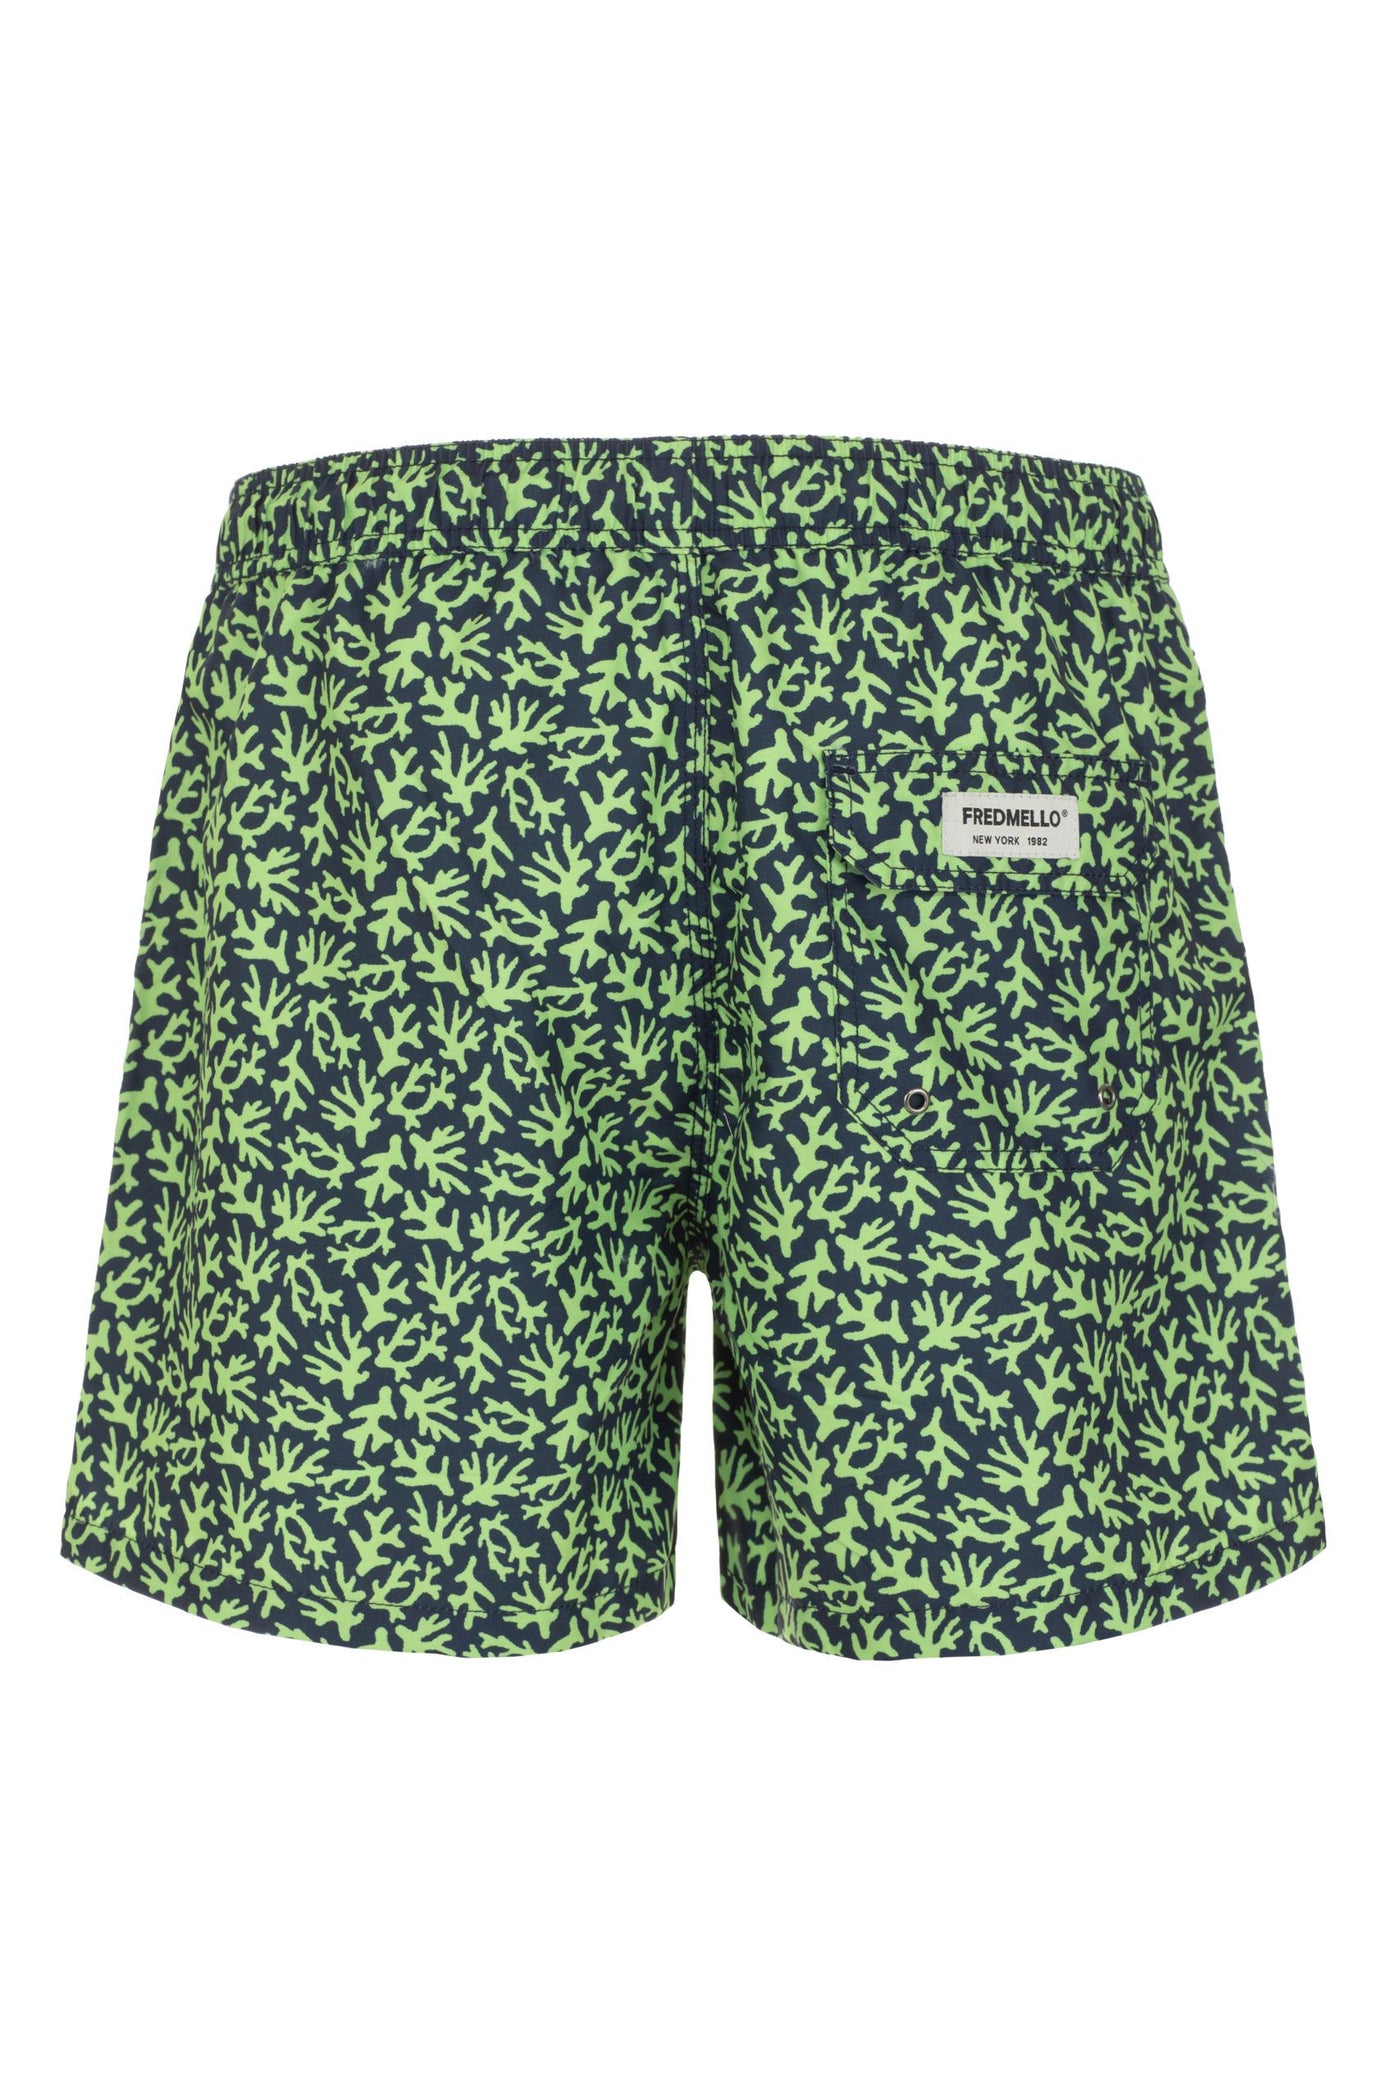 Fred Mello Summer Vibes Green Beach Shorts for Men